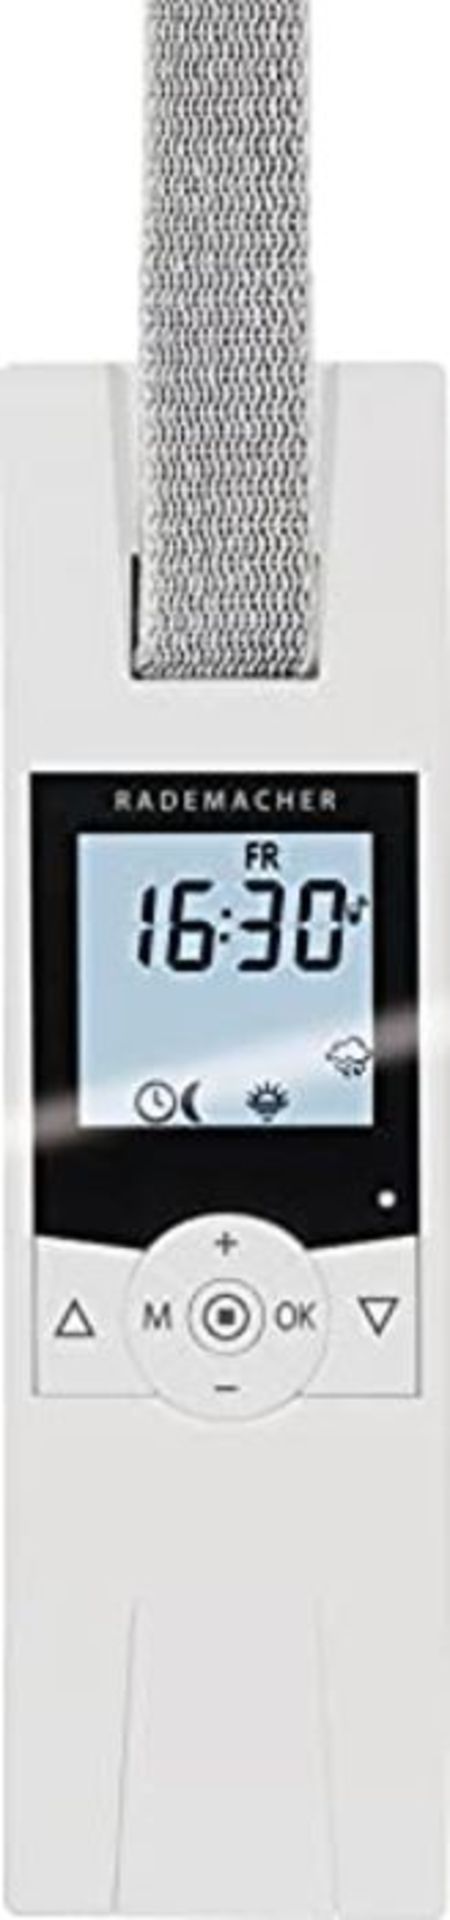 RRP £144.00 Rademacher RolloTron Comfort DuoFern 16234511 Shutter Control Panel Ultra White